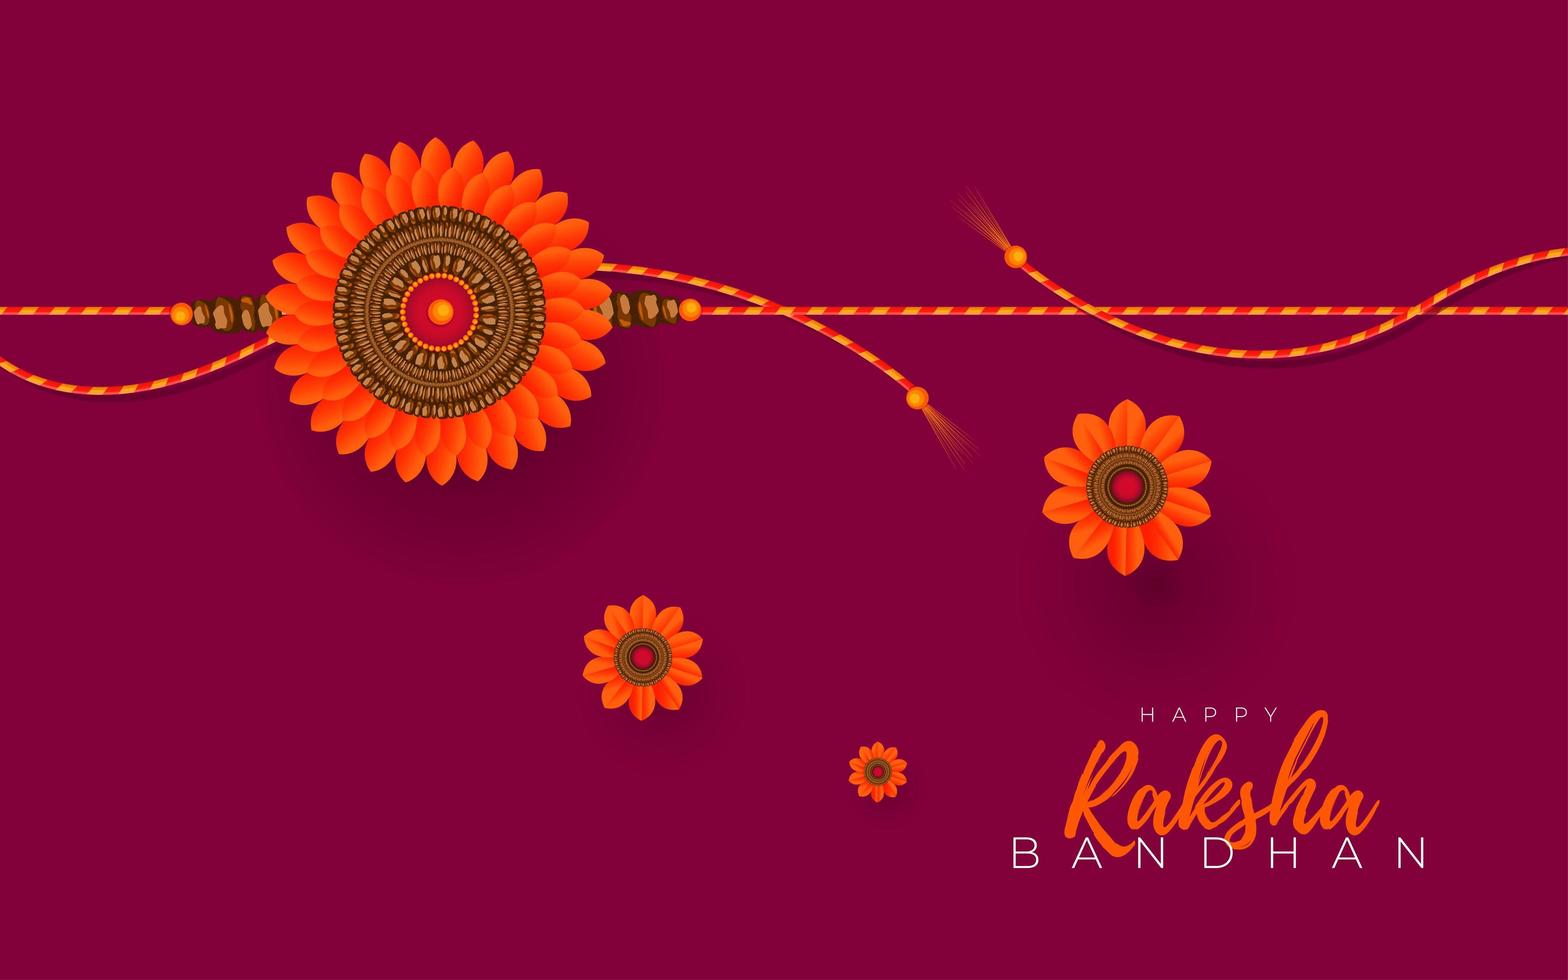 Happy Rakshabandhan 2021 : Rakshabandhan wishes, quotes, sms, status